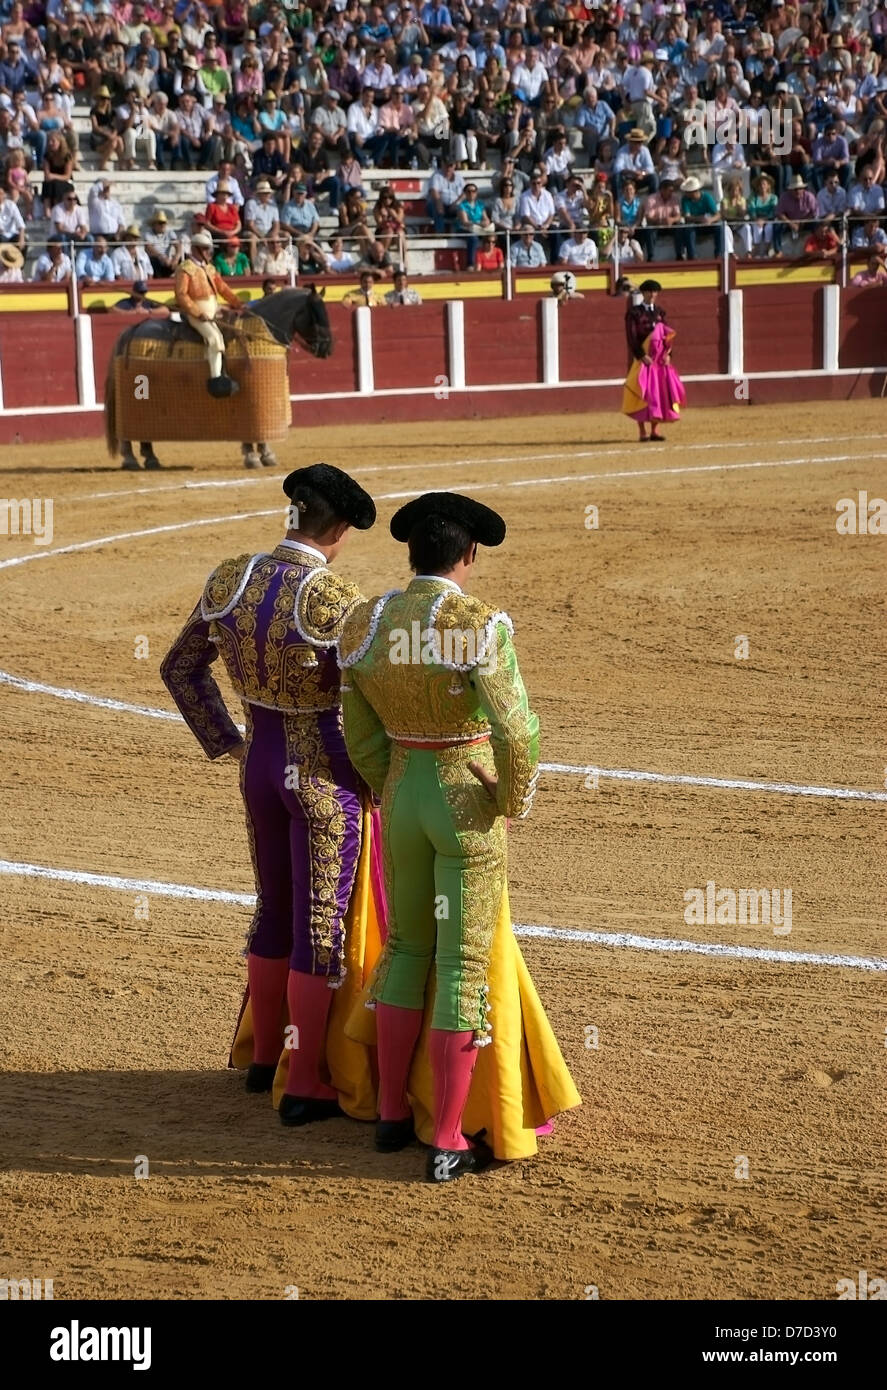 Bullfighter in the ring. brave matador – Stock Editorial Photo